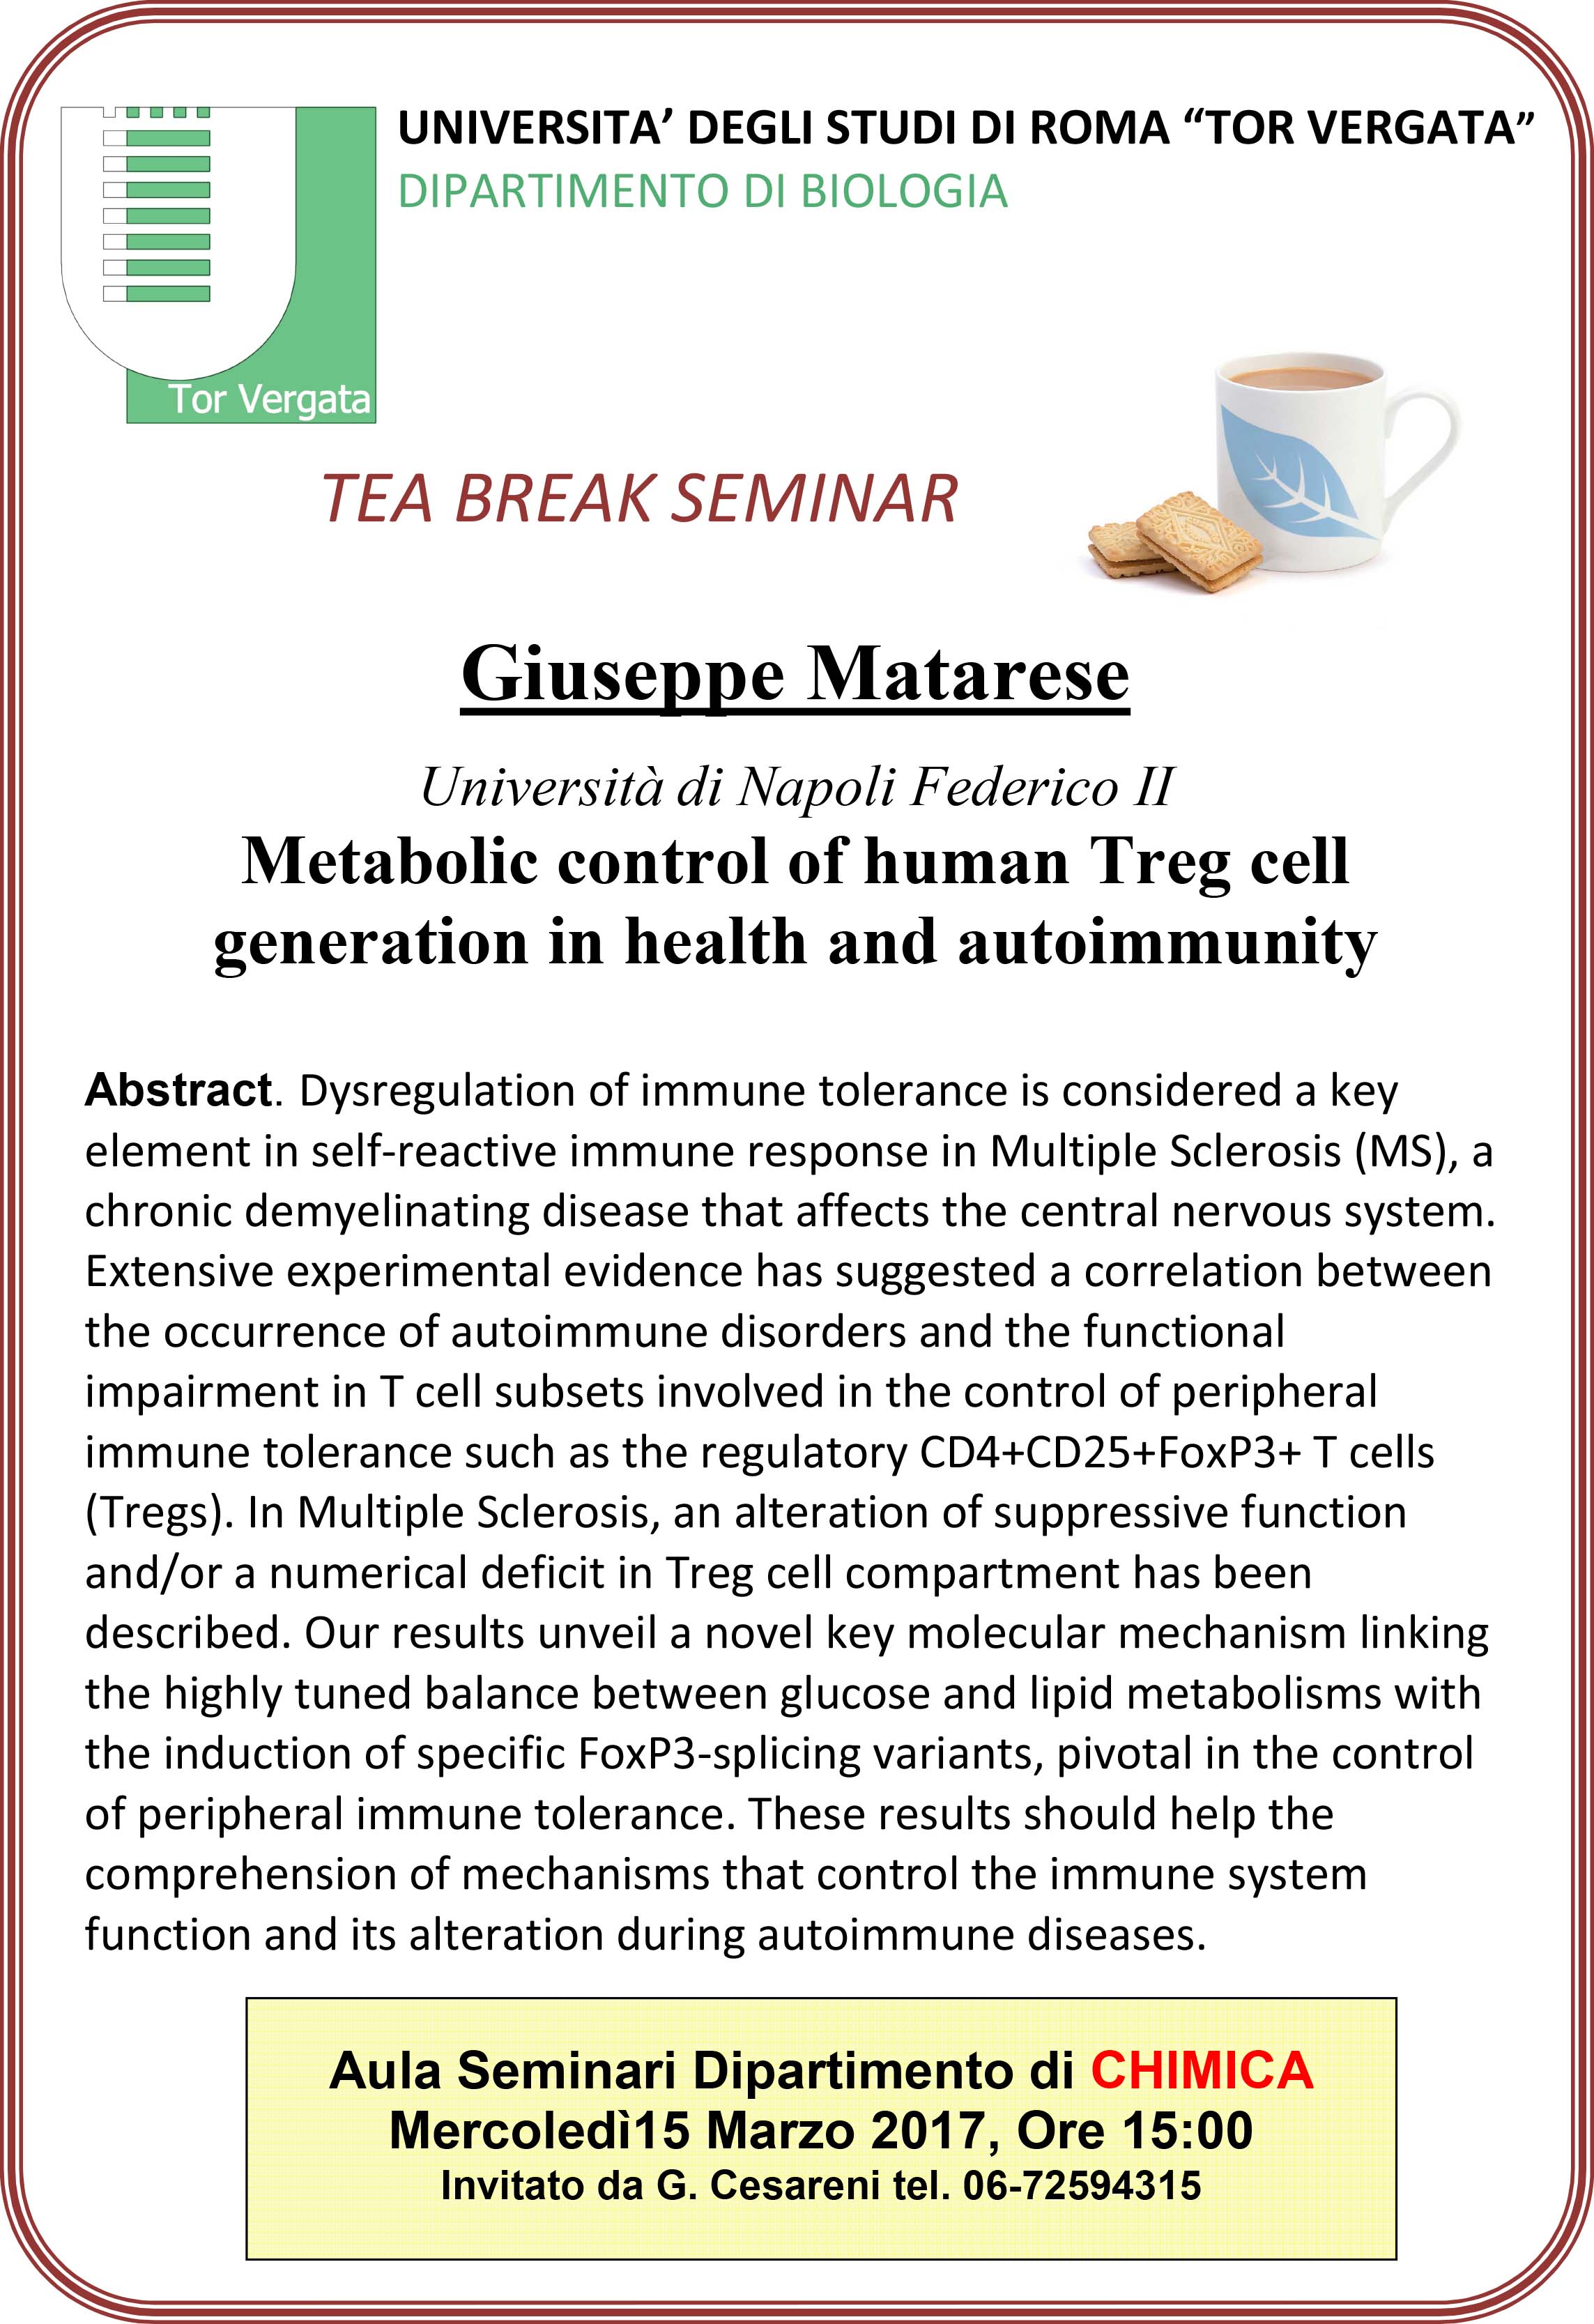 Seminario: Metabolic control of human Treg cell generation in health and autoimmunity